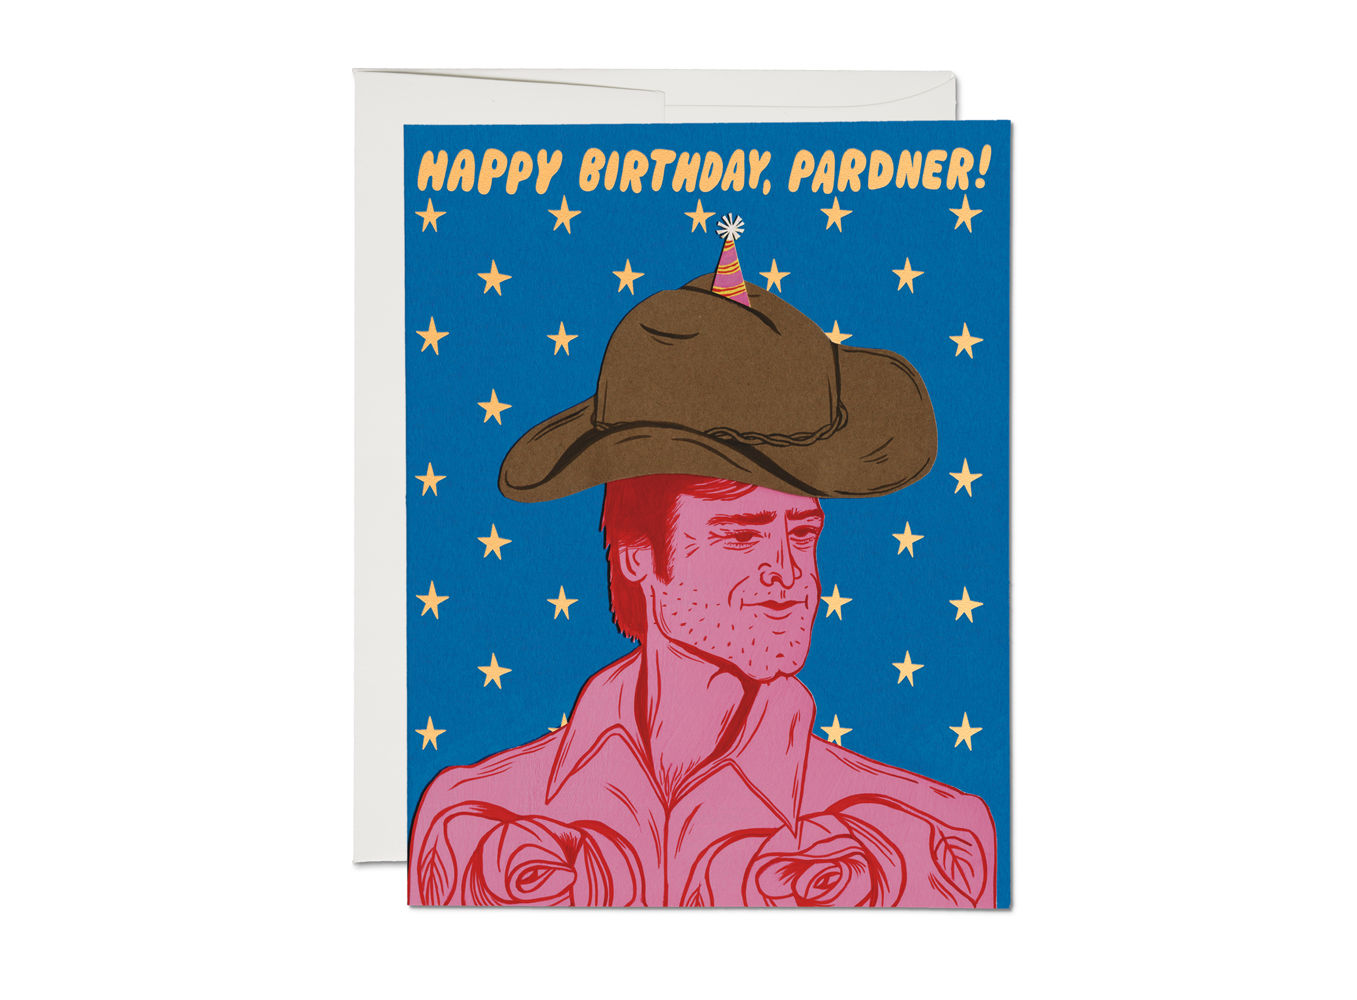 Birthday Pardner Birthday Card